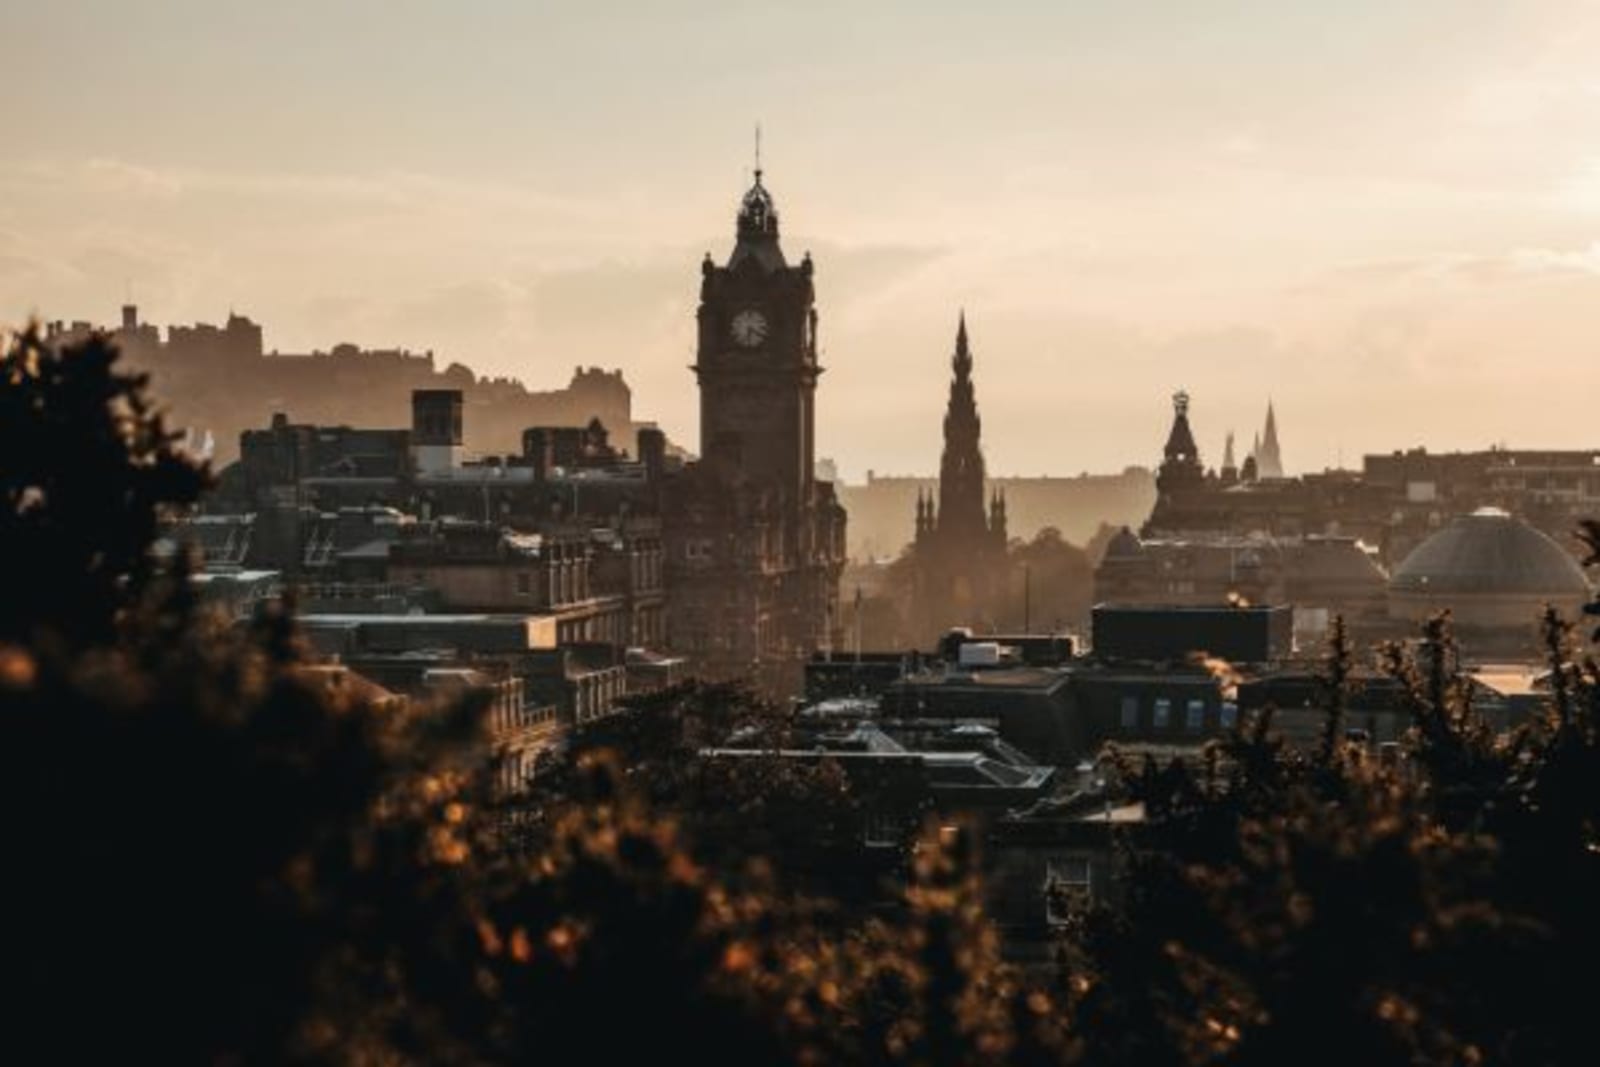 Dark City view of Edinburgh from Calton Hill